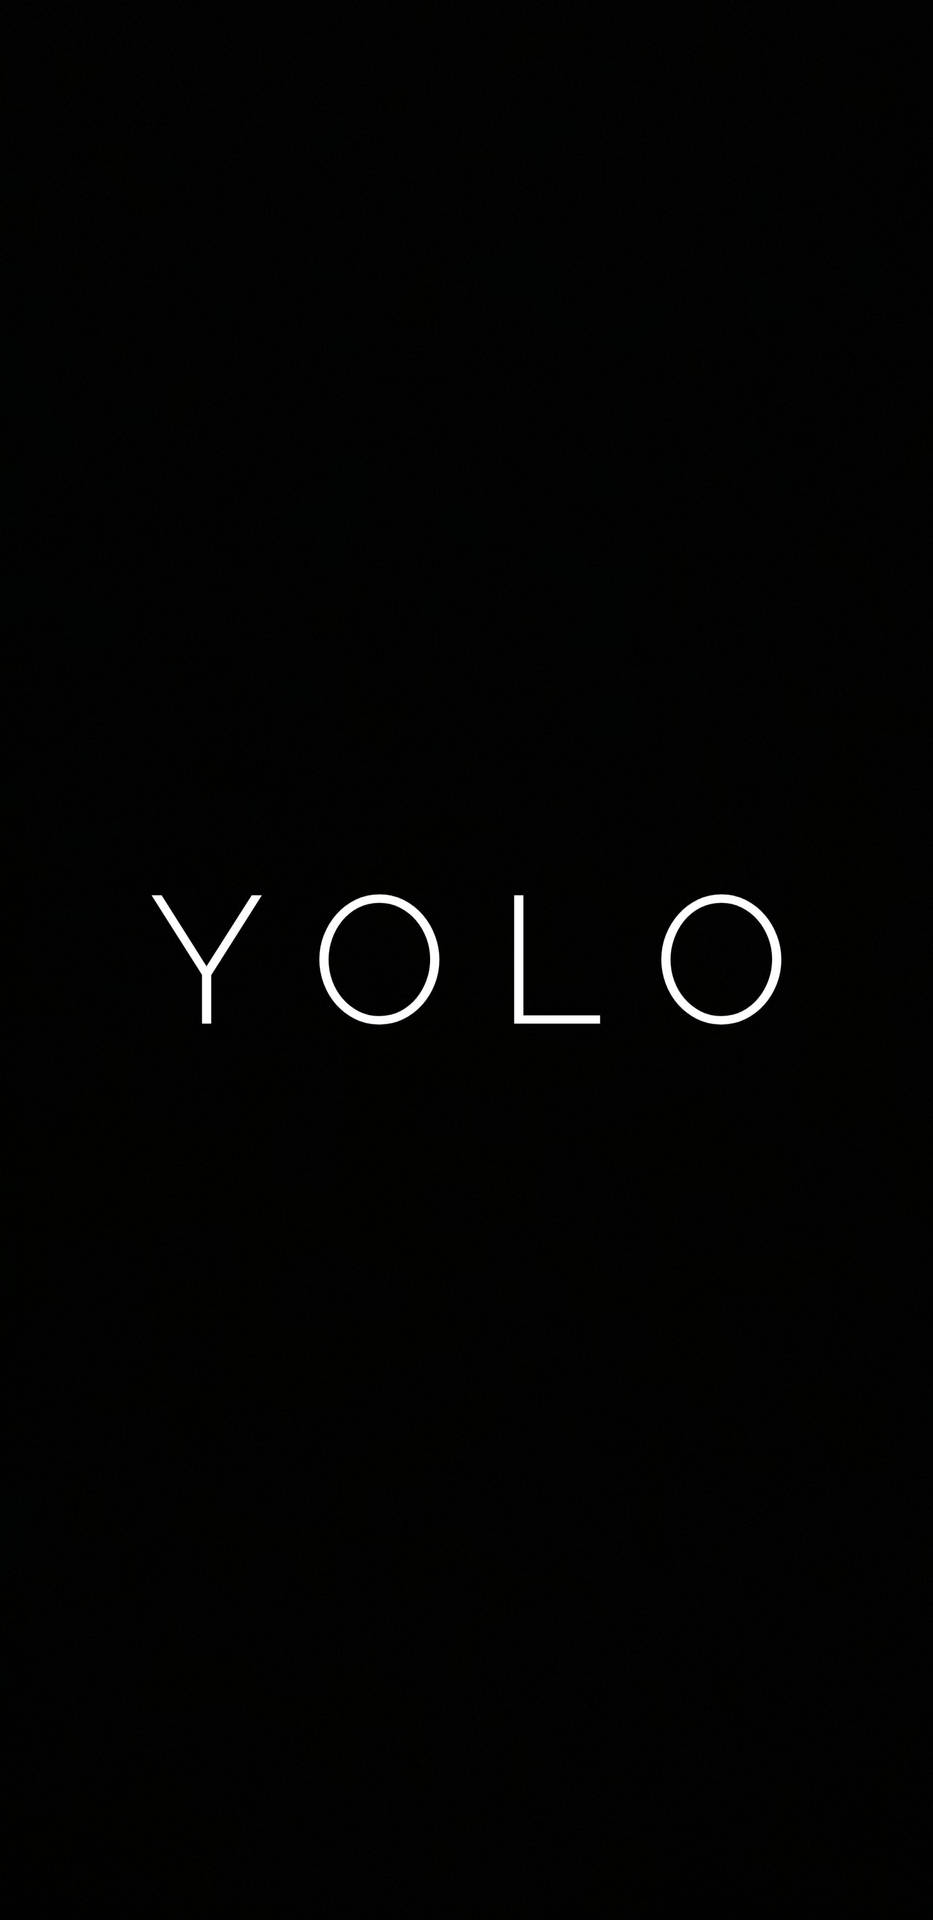 Embrace Life with 'YOLO' Motivation on a Black Backdrop Wallpaper